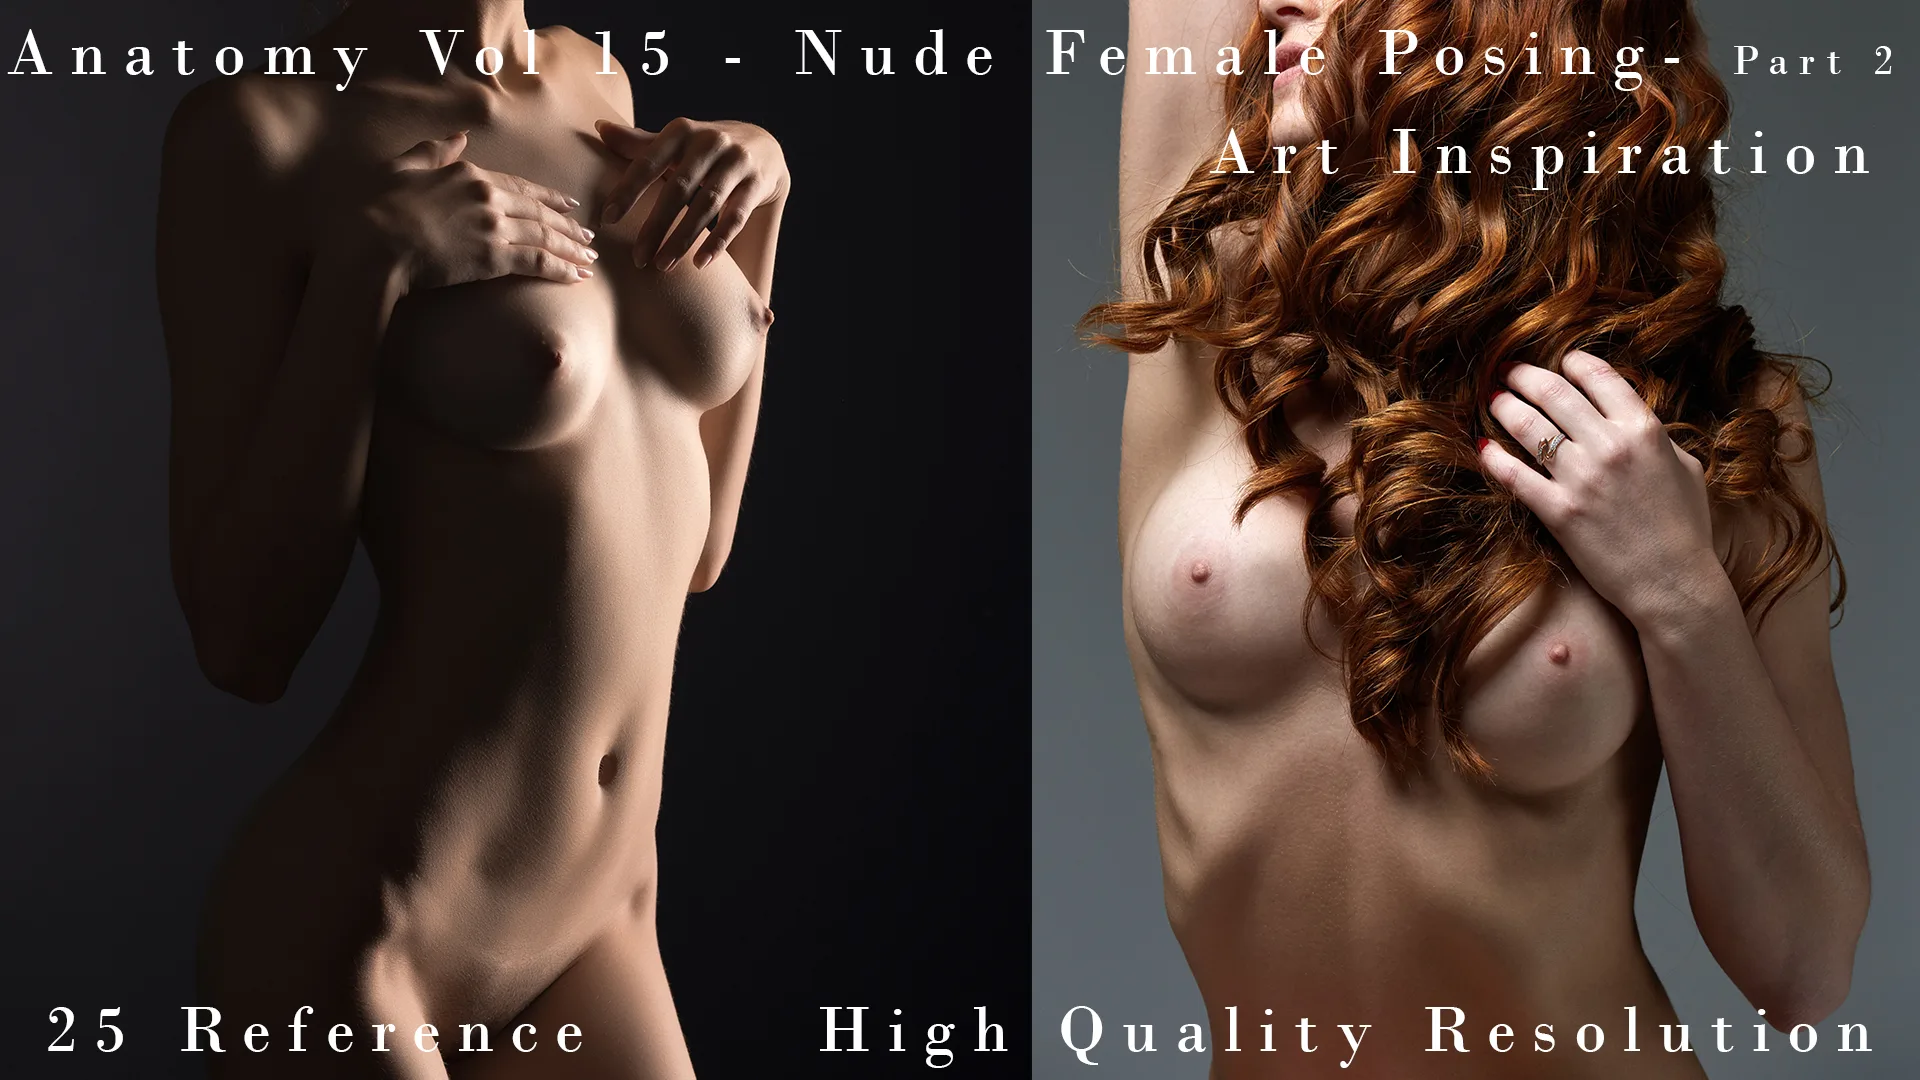 Anatomy Vol 15 - Nude FeMale Posing Part 2